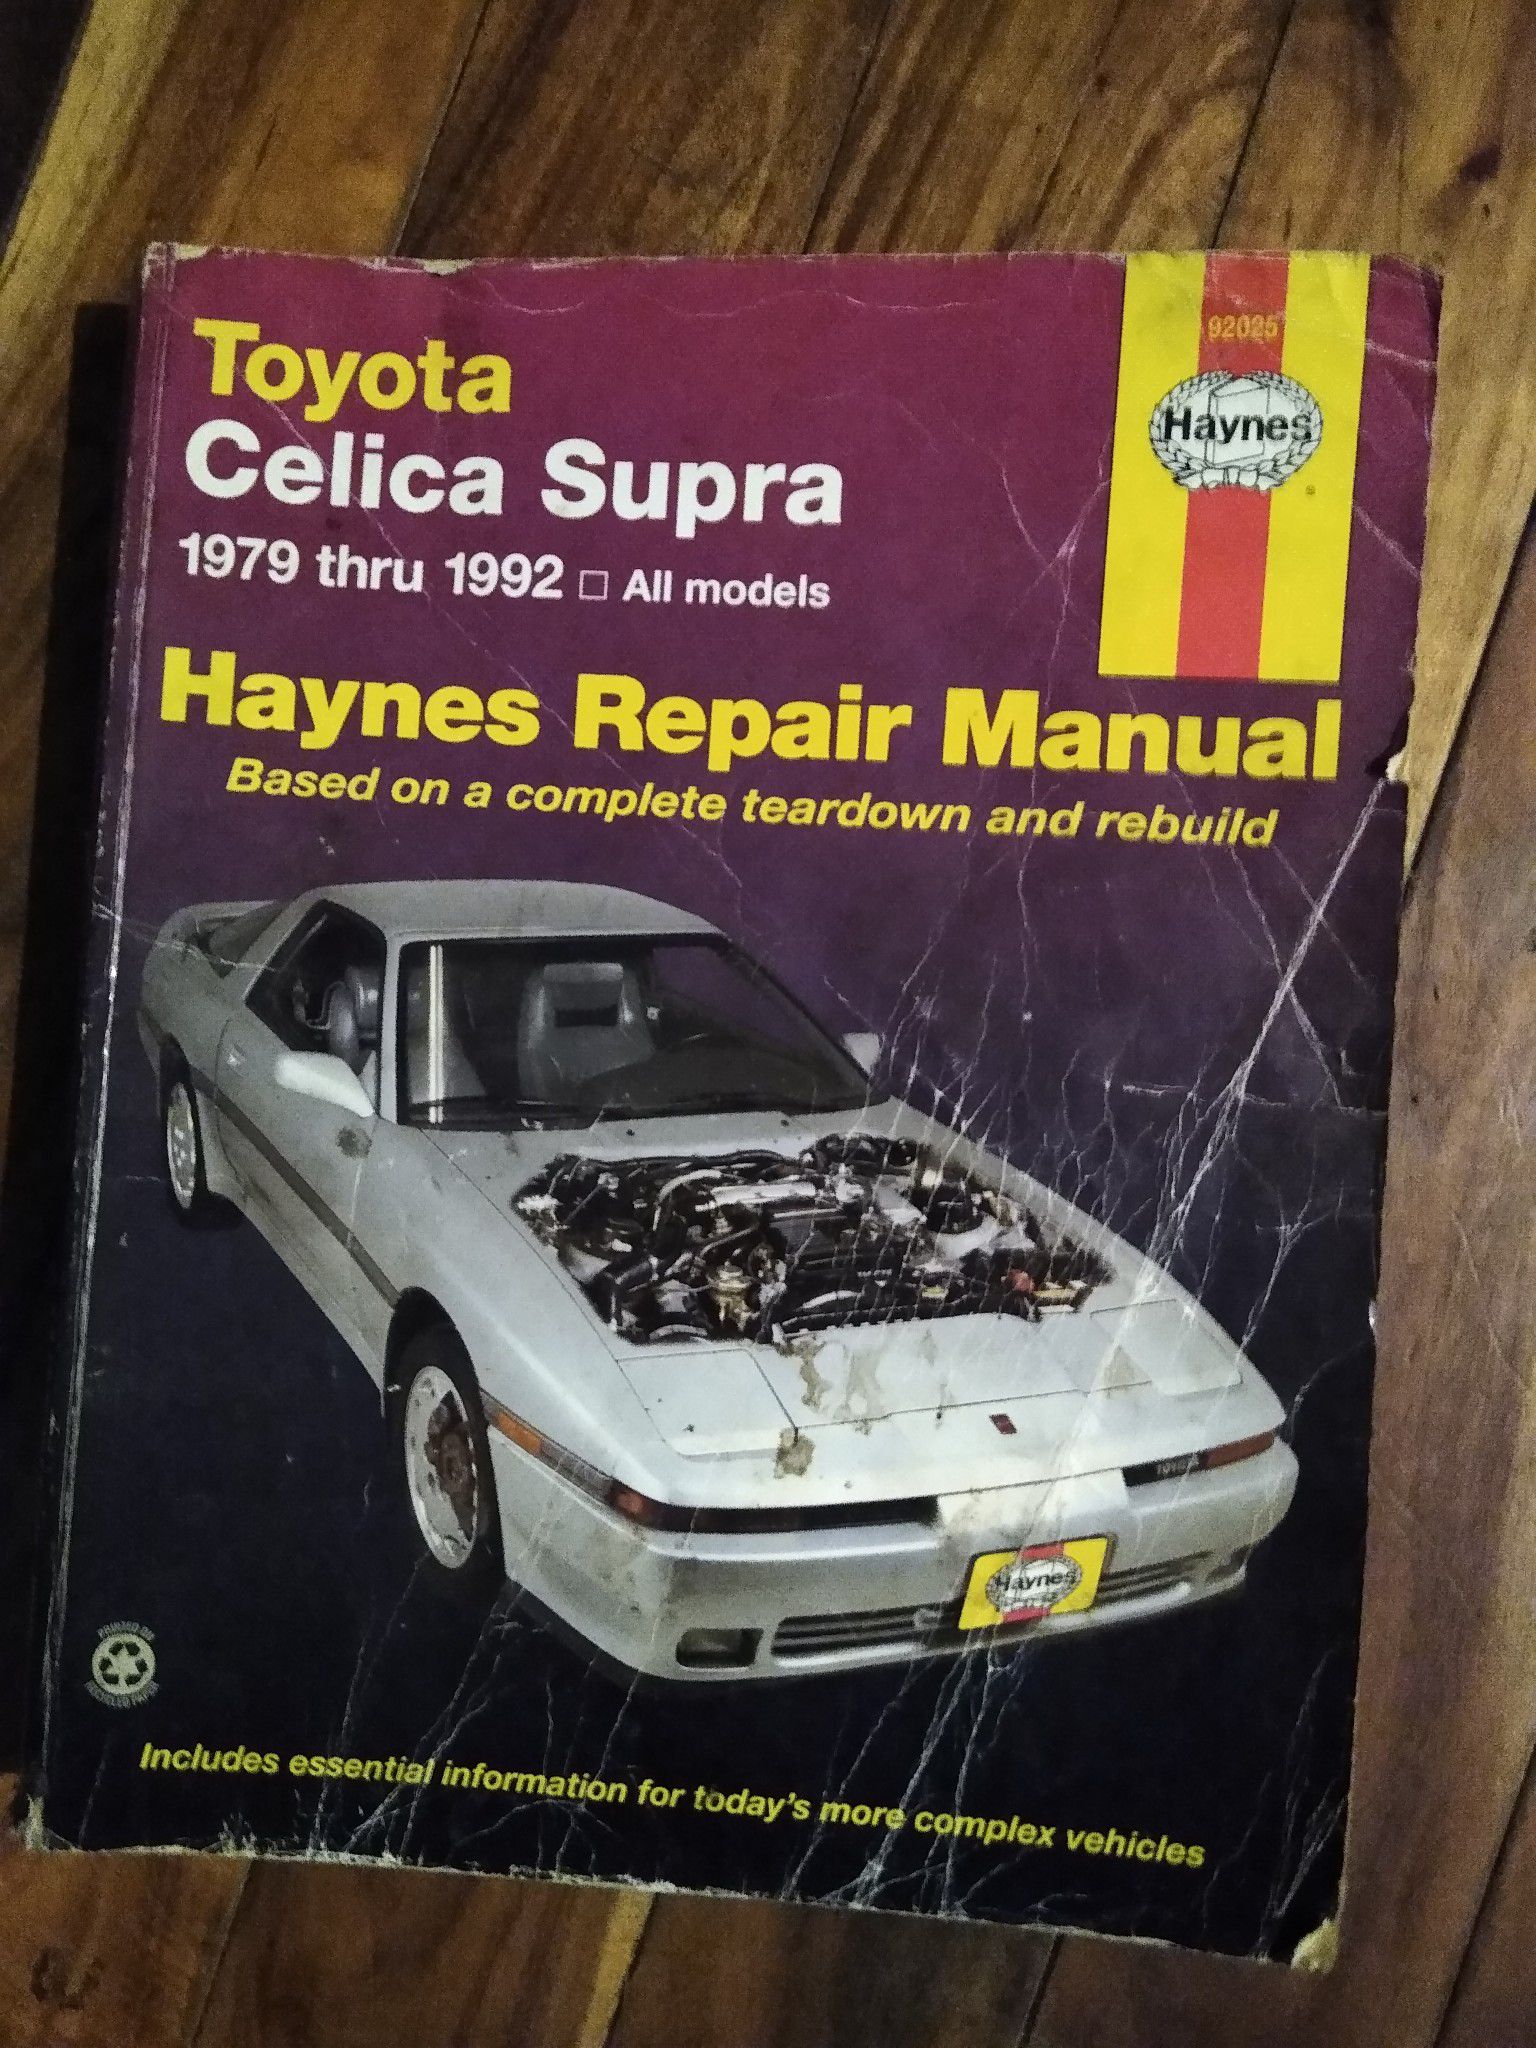 Toyota Celica Supra manual